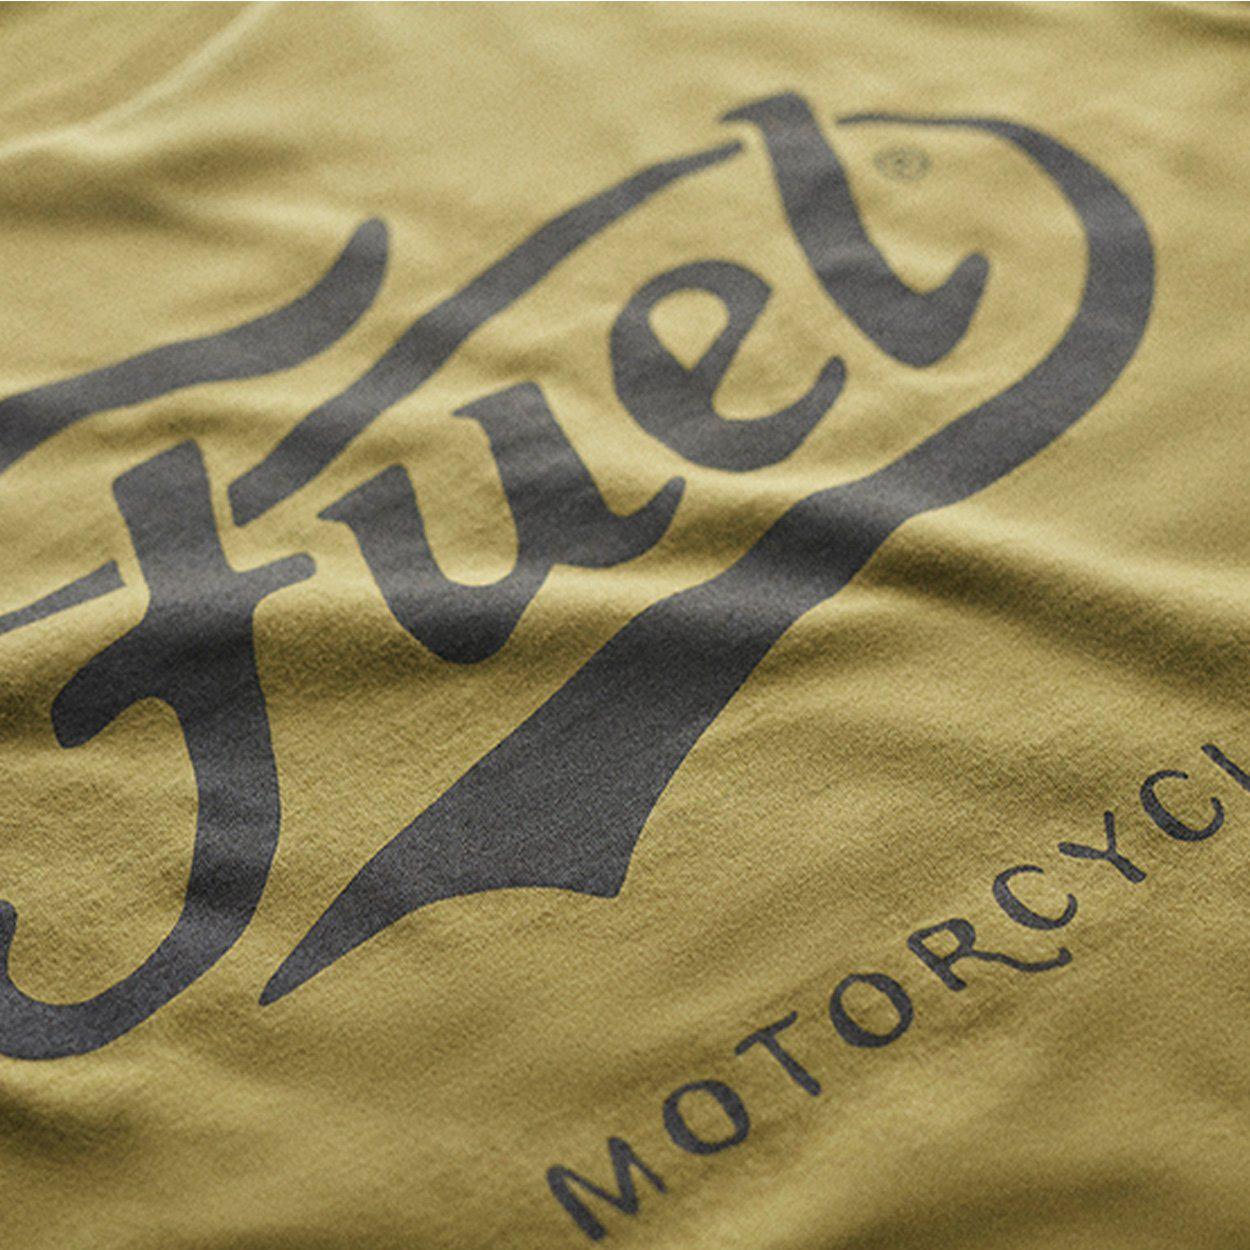 Fuel T-Shirt Logo Army